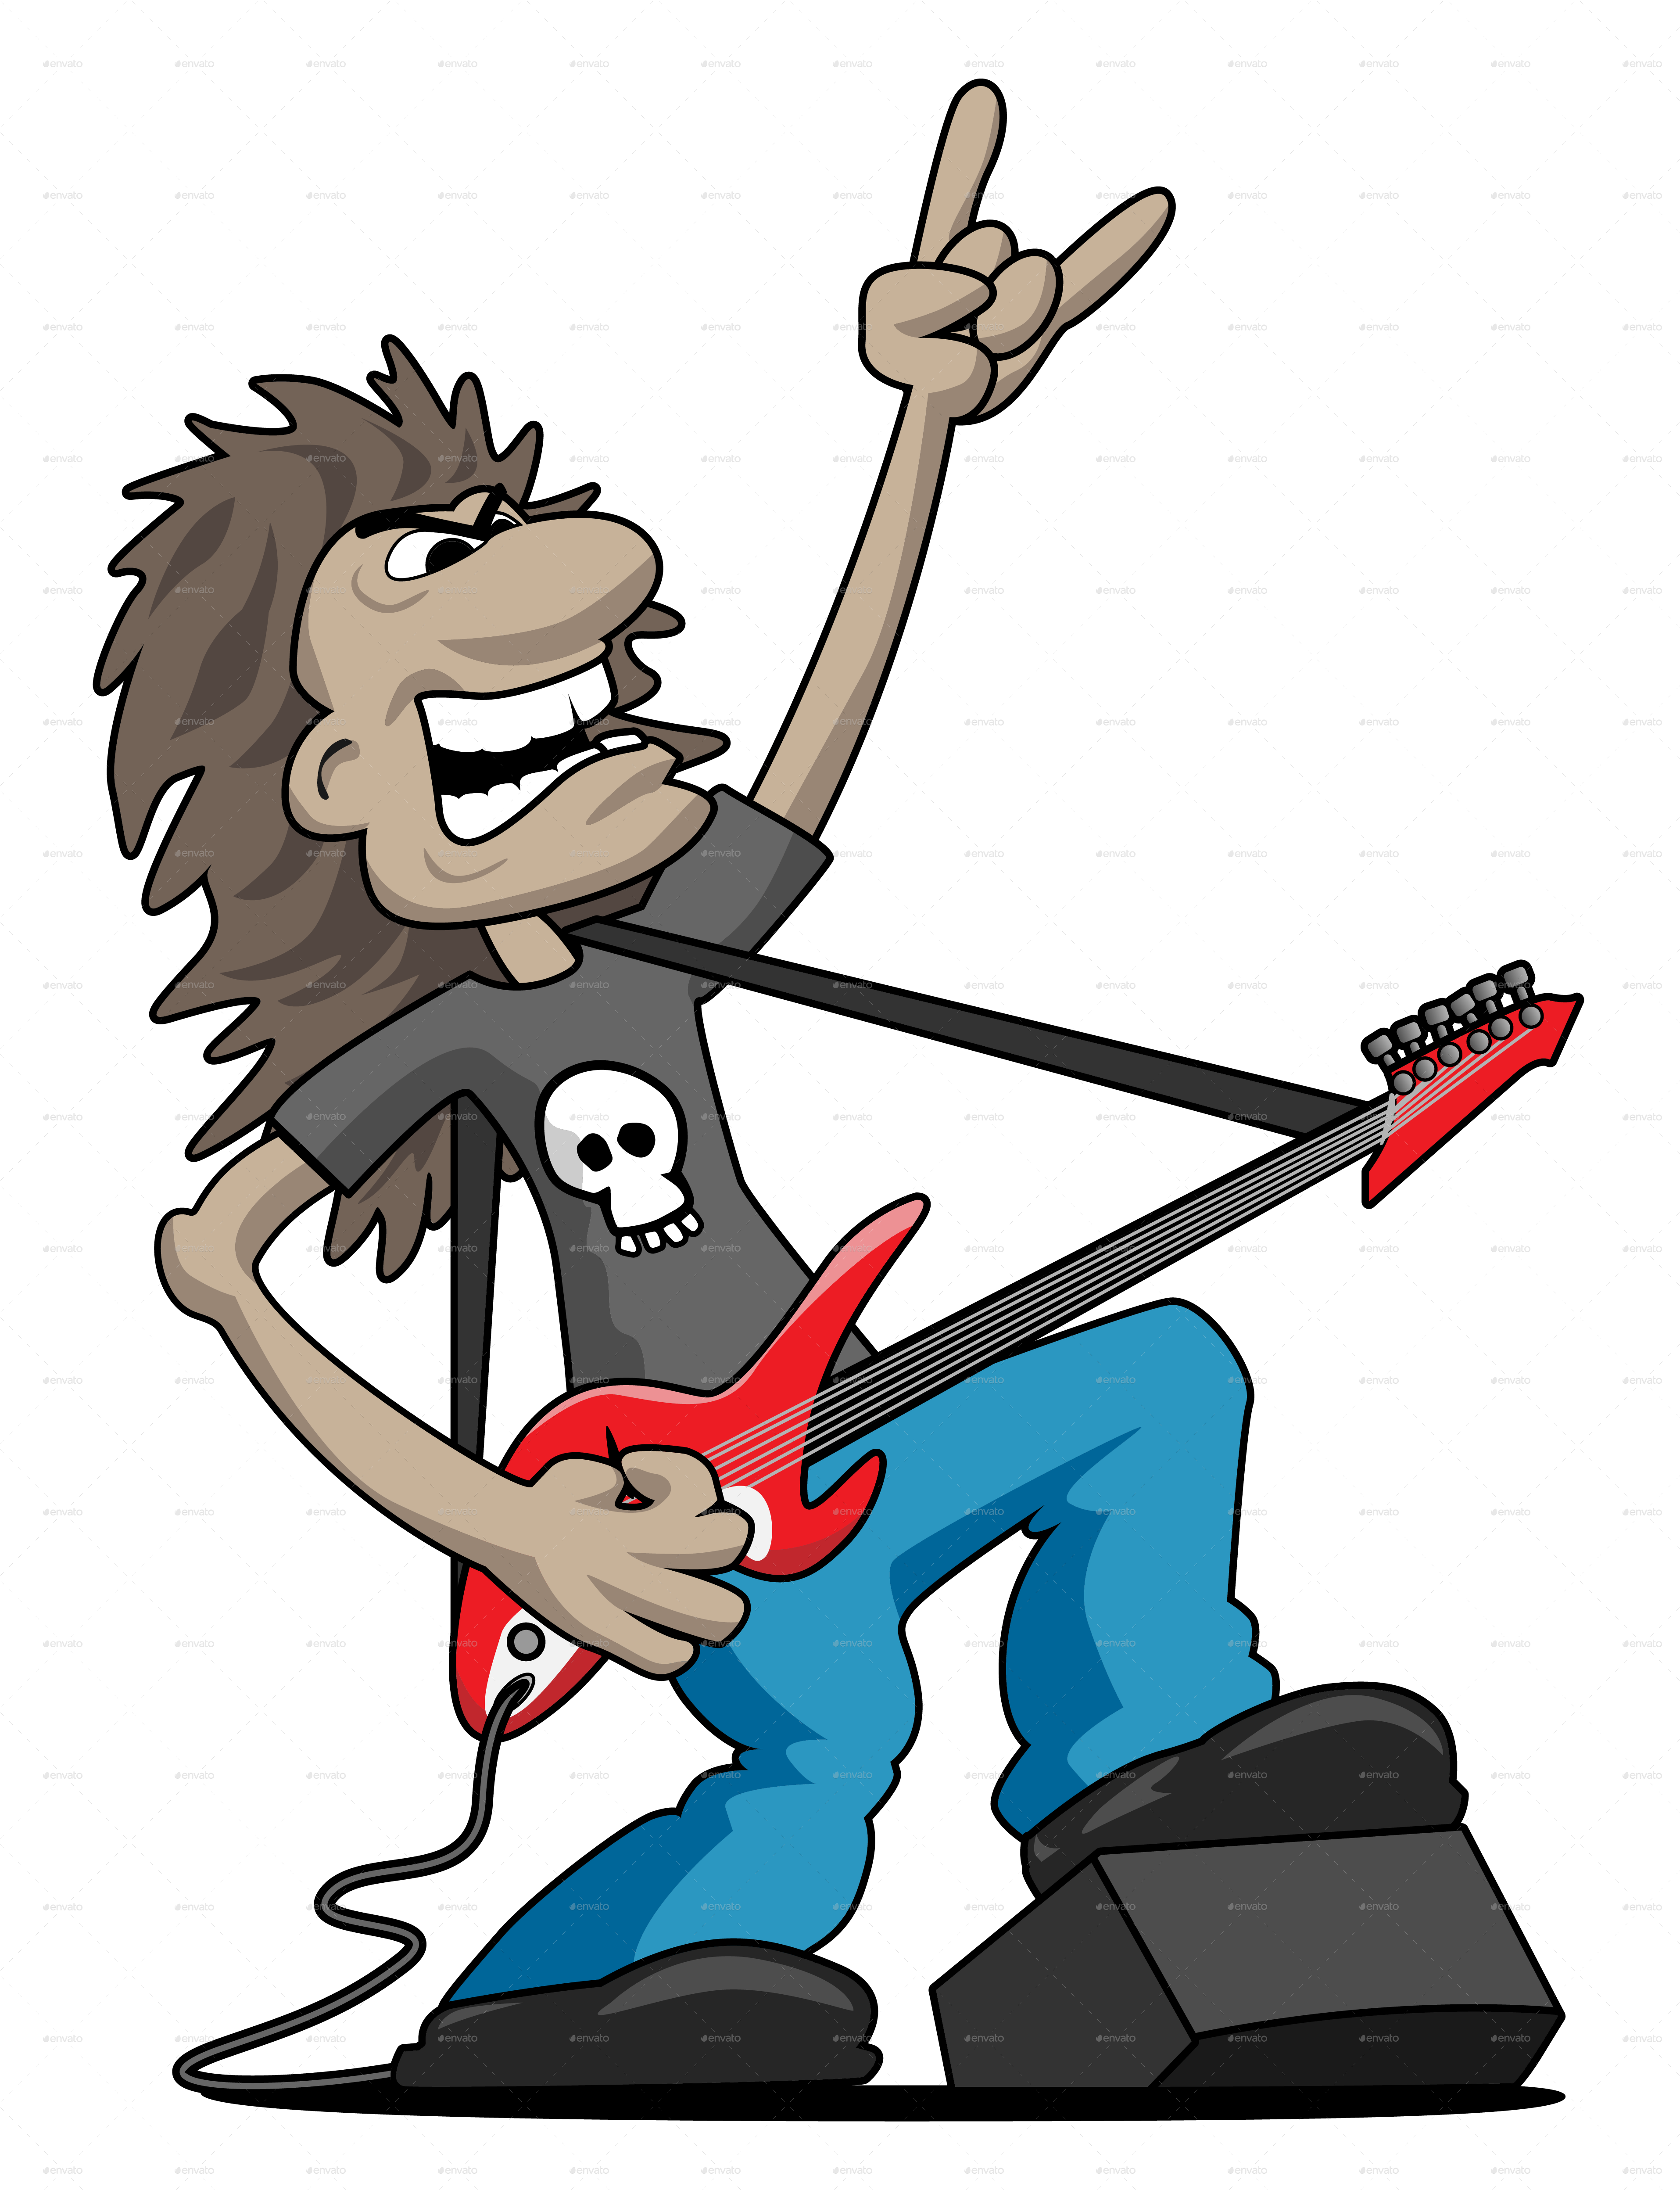 A Cartoon Of A Man Playing A Guitar